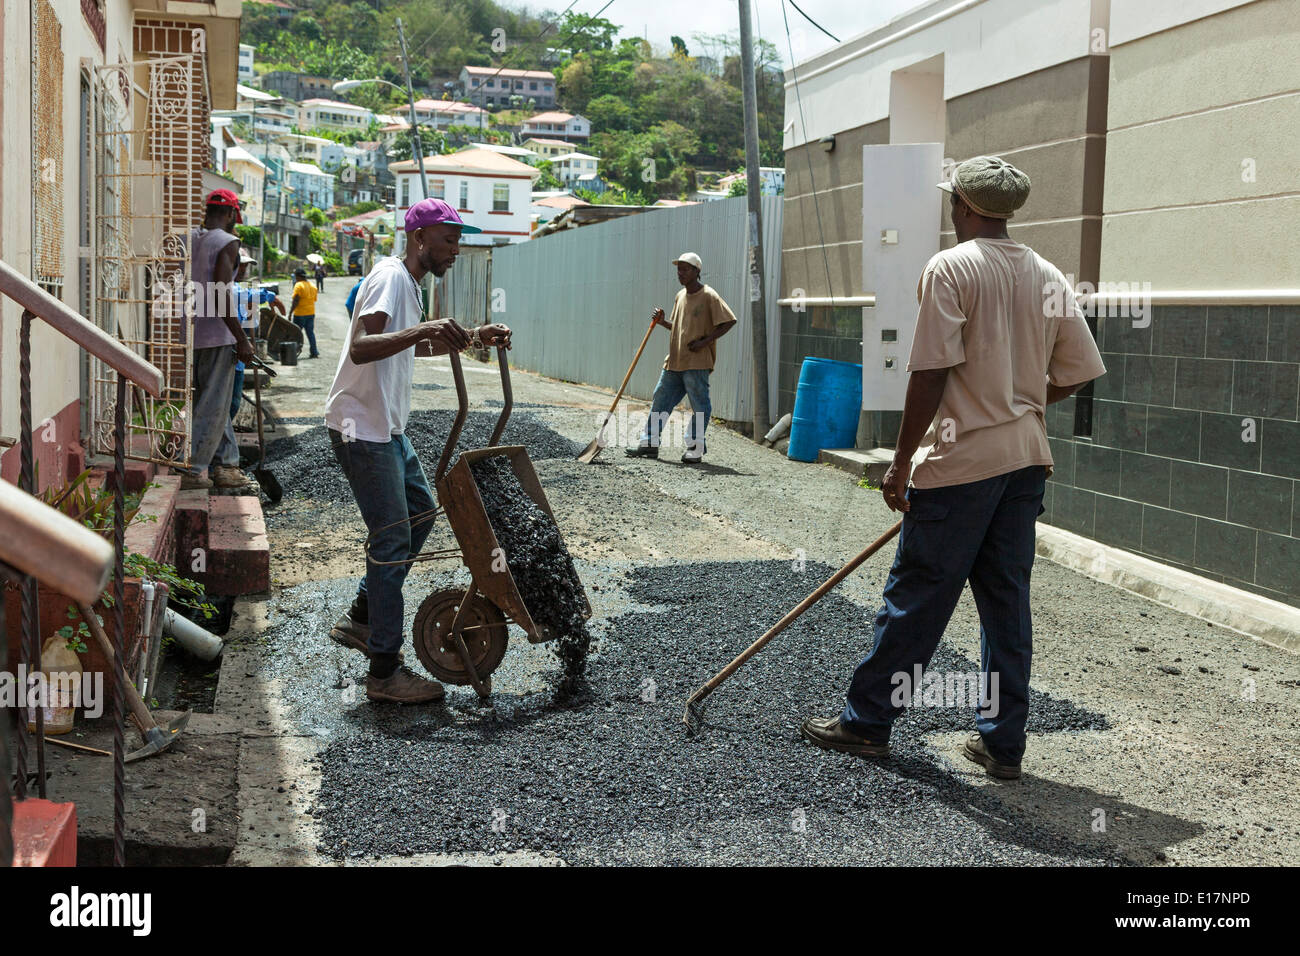 Workmen repairing a road, using tar and handheld tools, in St George, Grenada, East Indies Stock Photo